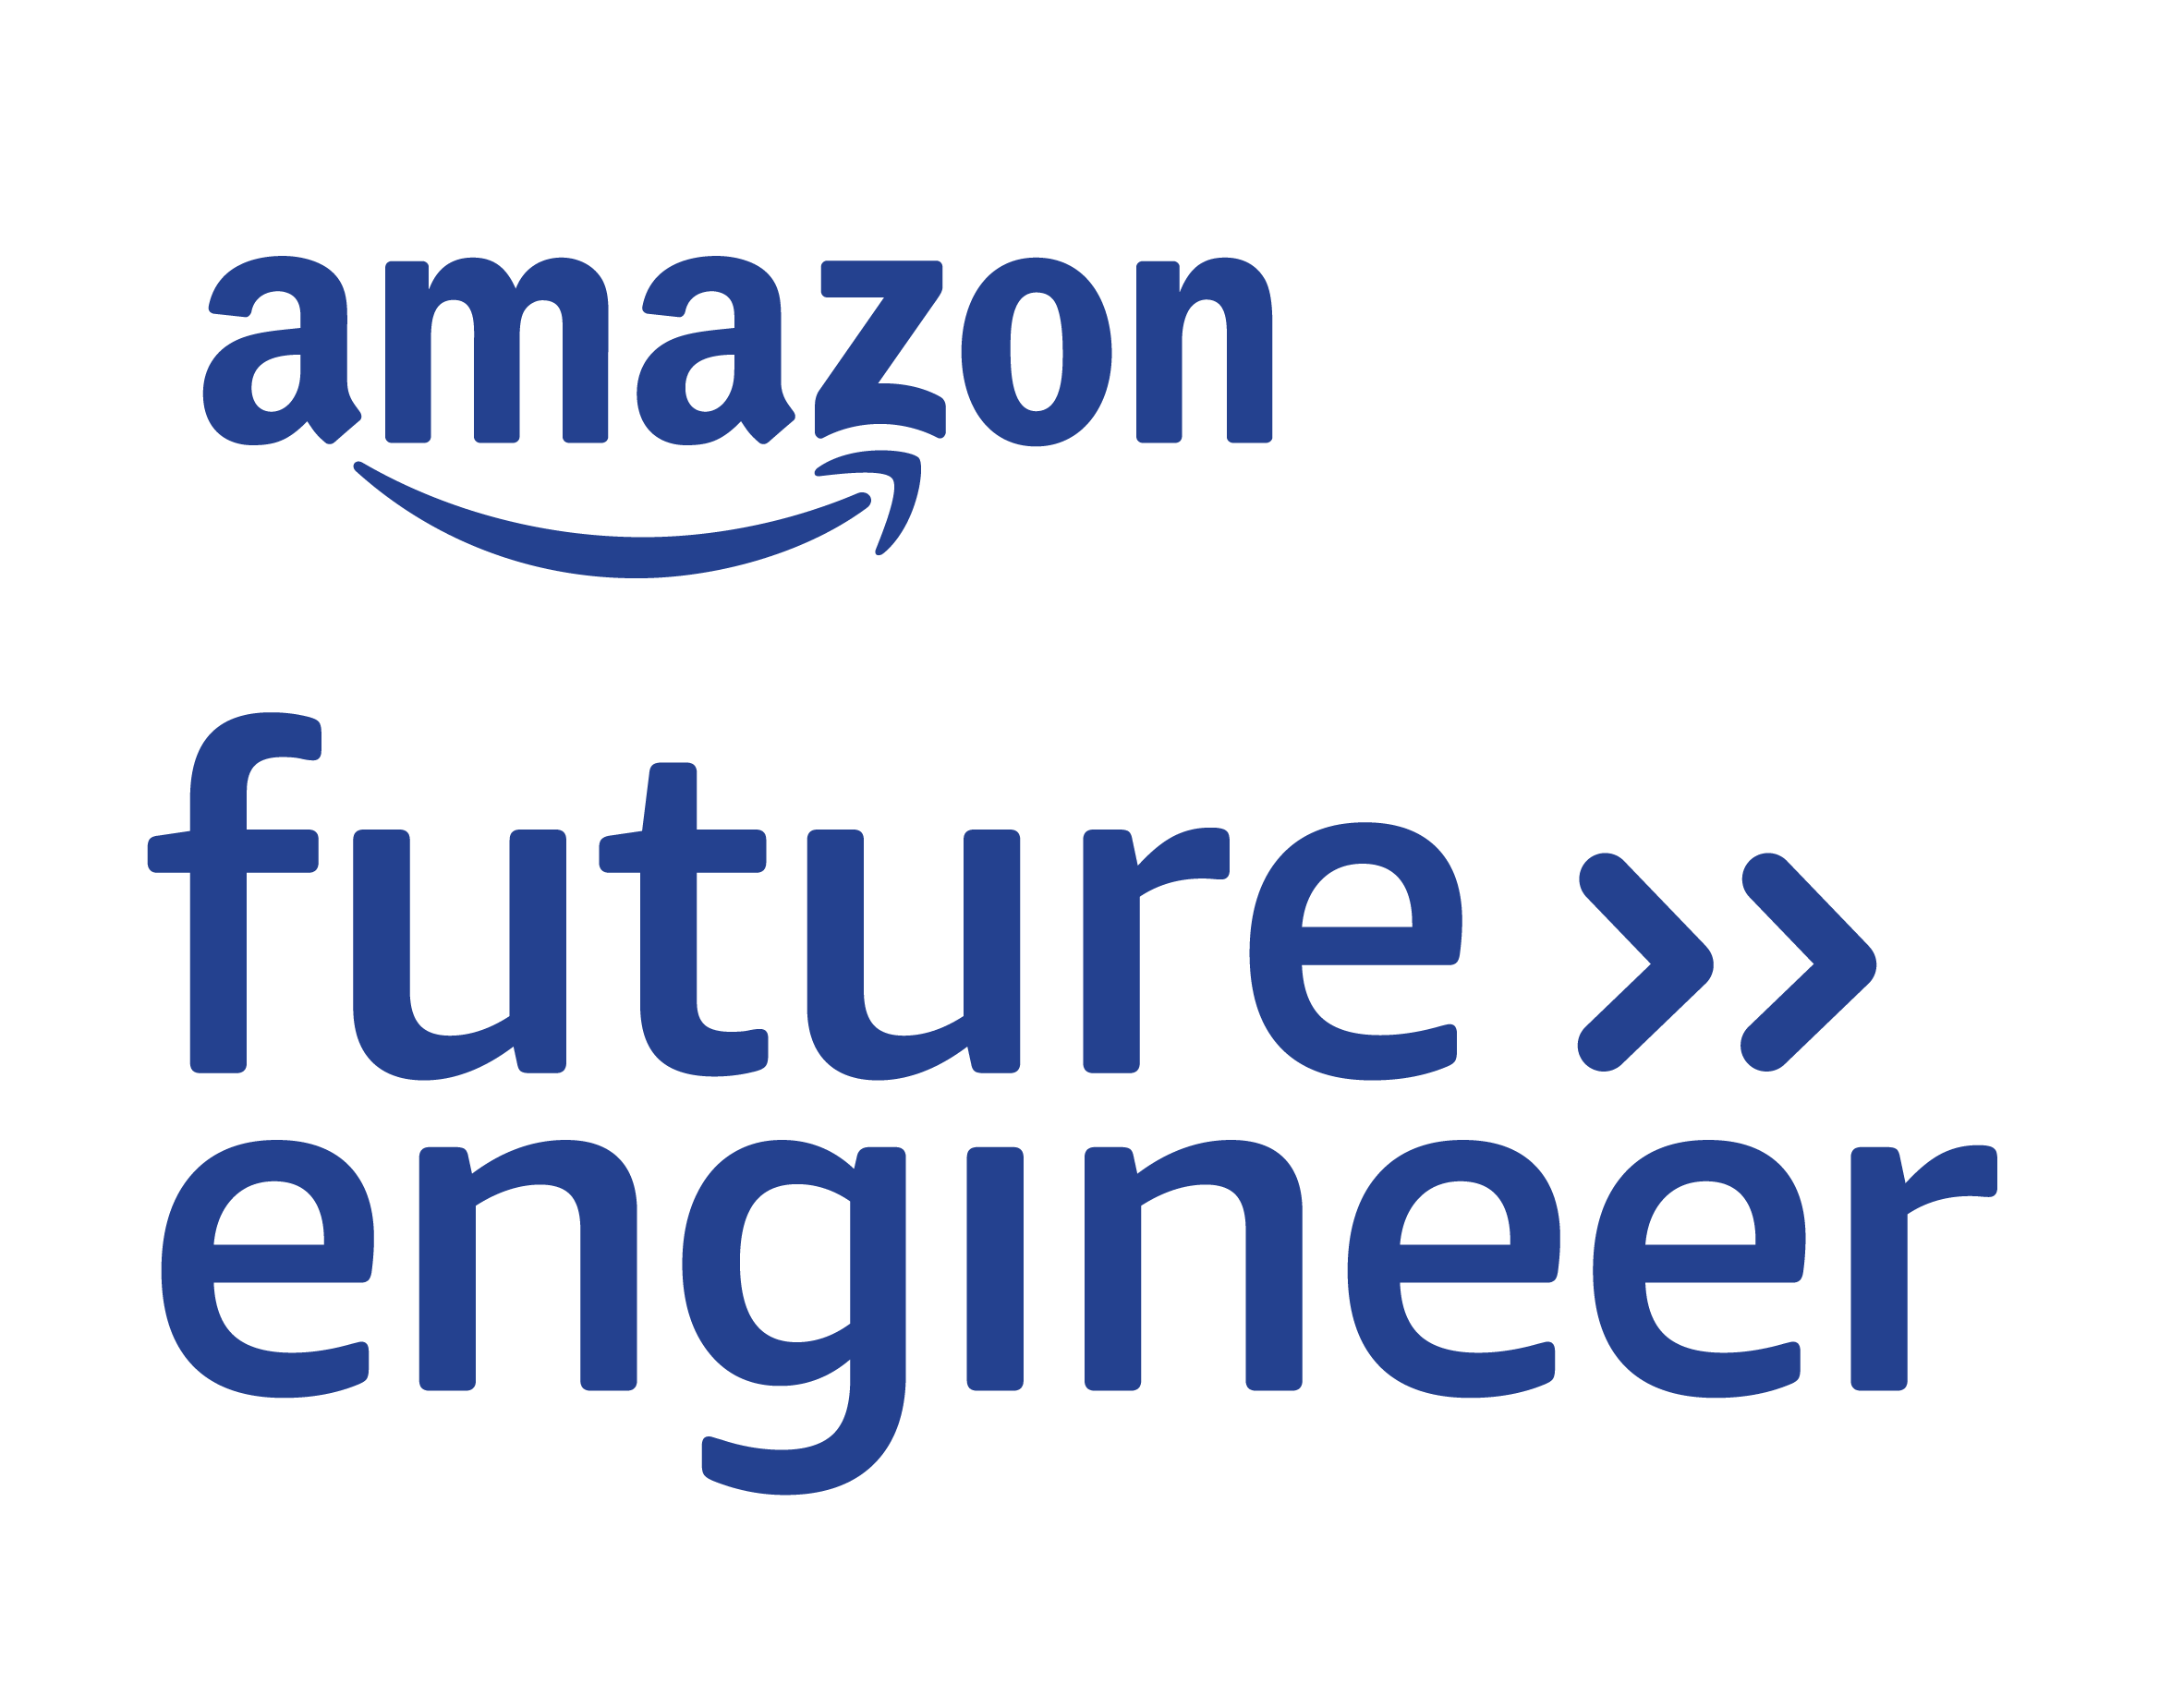 Amazon Future Engineer logo